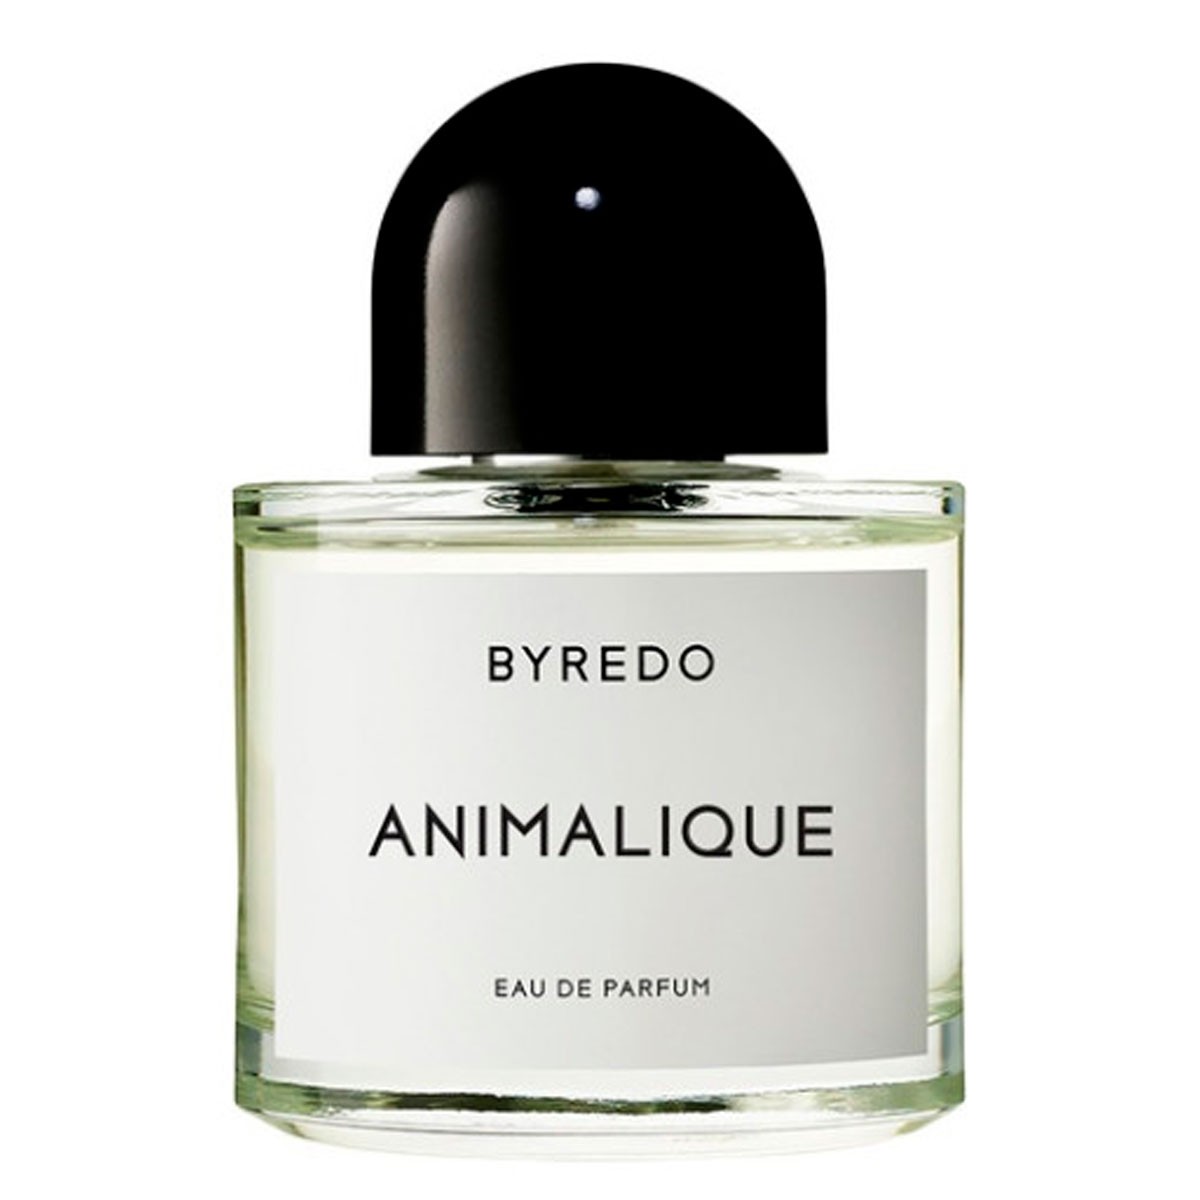 Byredo Animalique Eau de Parfum - Perfume